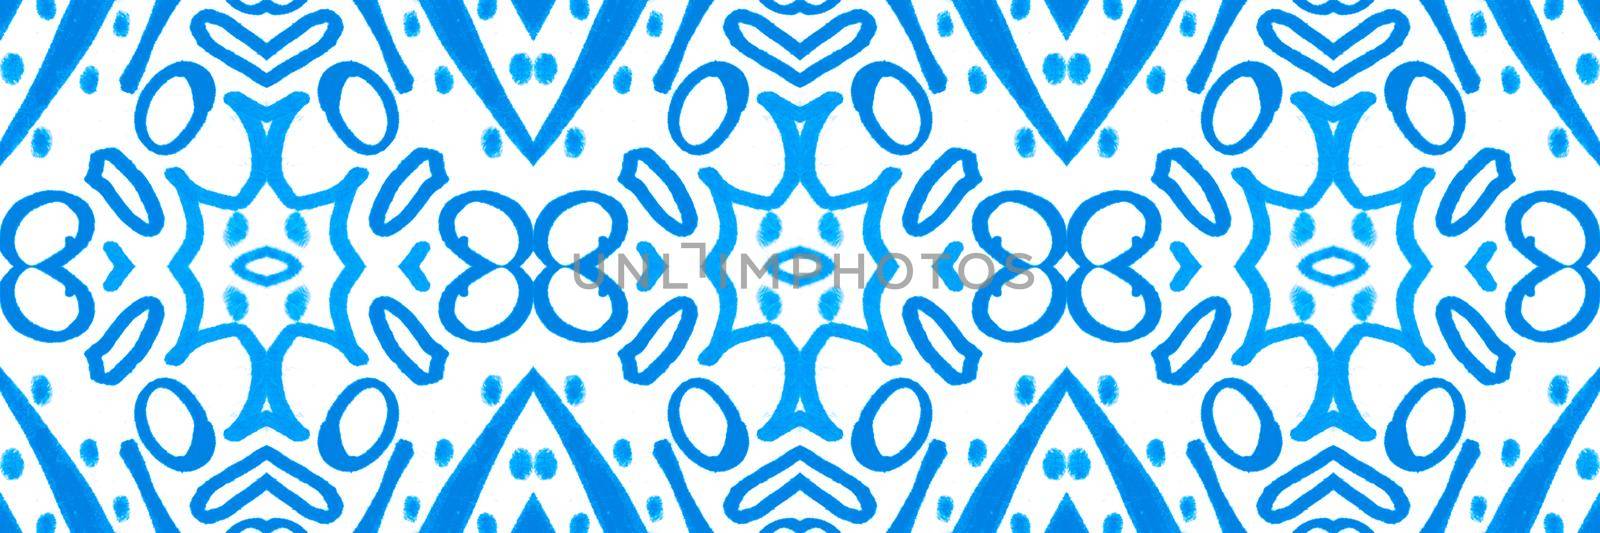 Spanish pattern. Mexican modern fabric. Vintage majolica or azulejo ceramic ornament. Spanish tile design. Seamless italian mosaic. Watercolor talavera background. Floral spanish pattern.